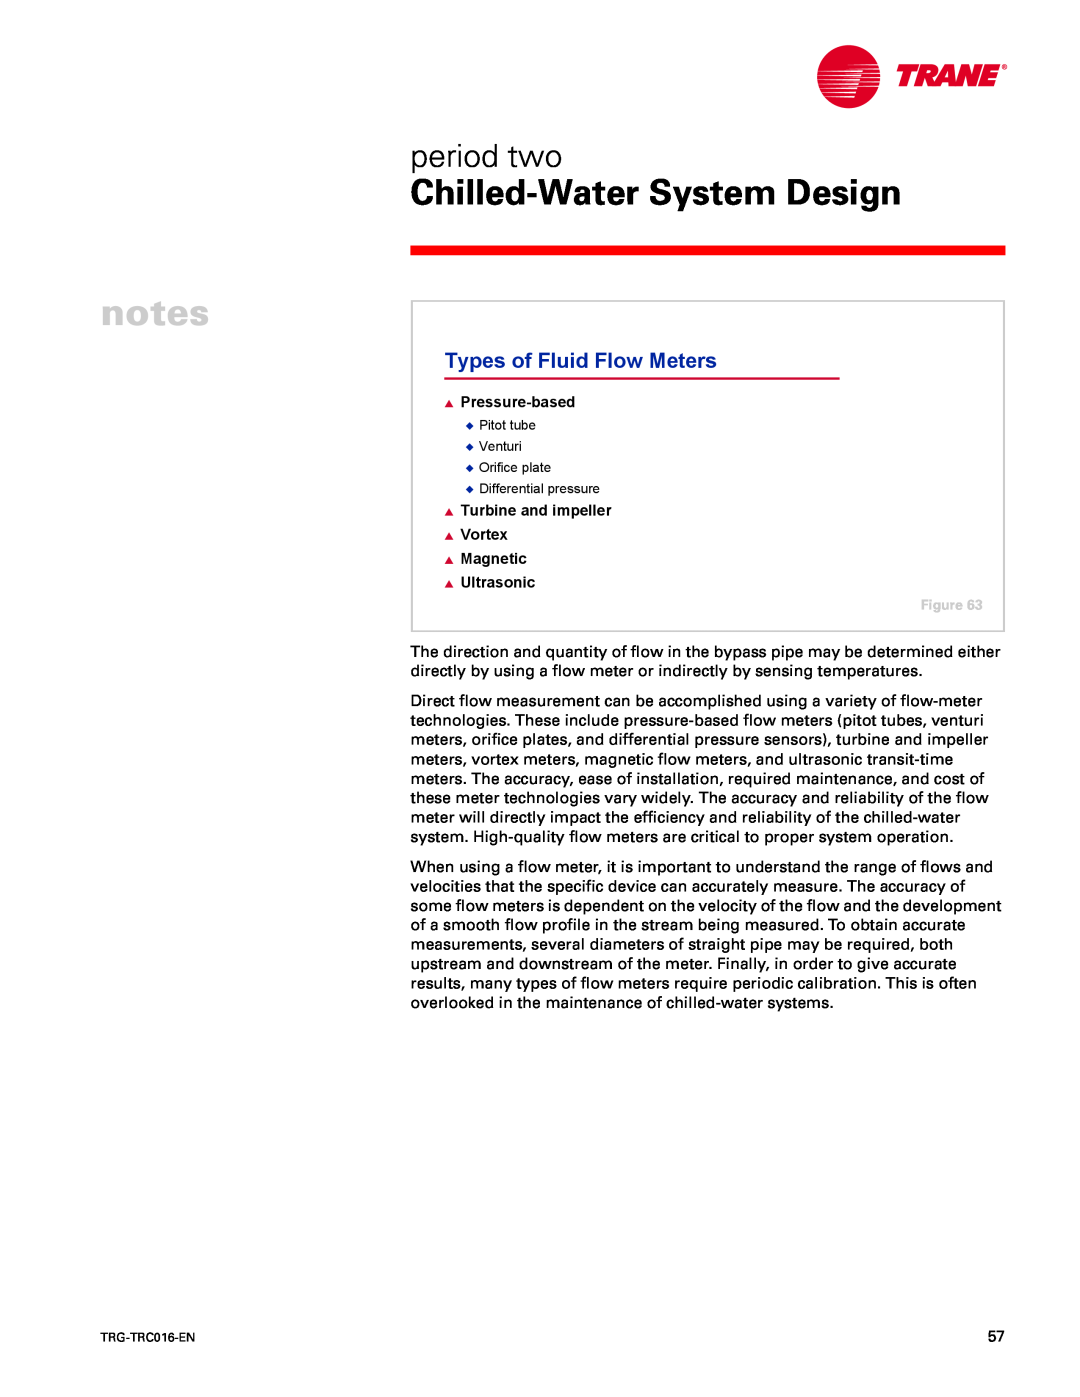 Trane TRG-TRC016-EN manual Types of Fluid Flow Meters, Chilled-WaterSystem Design, period two, Pressure-based 